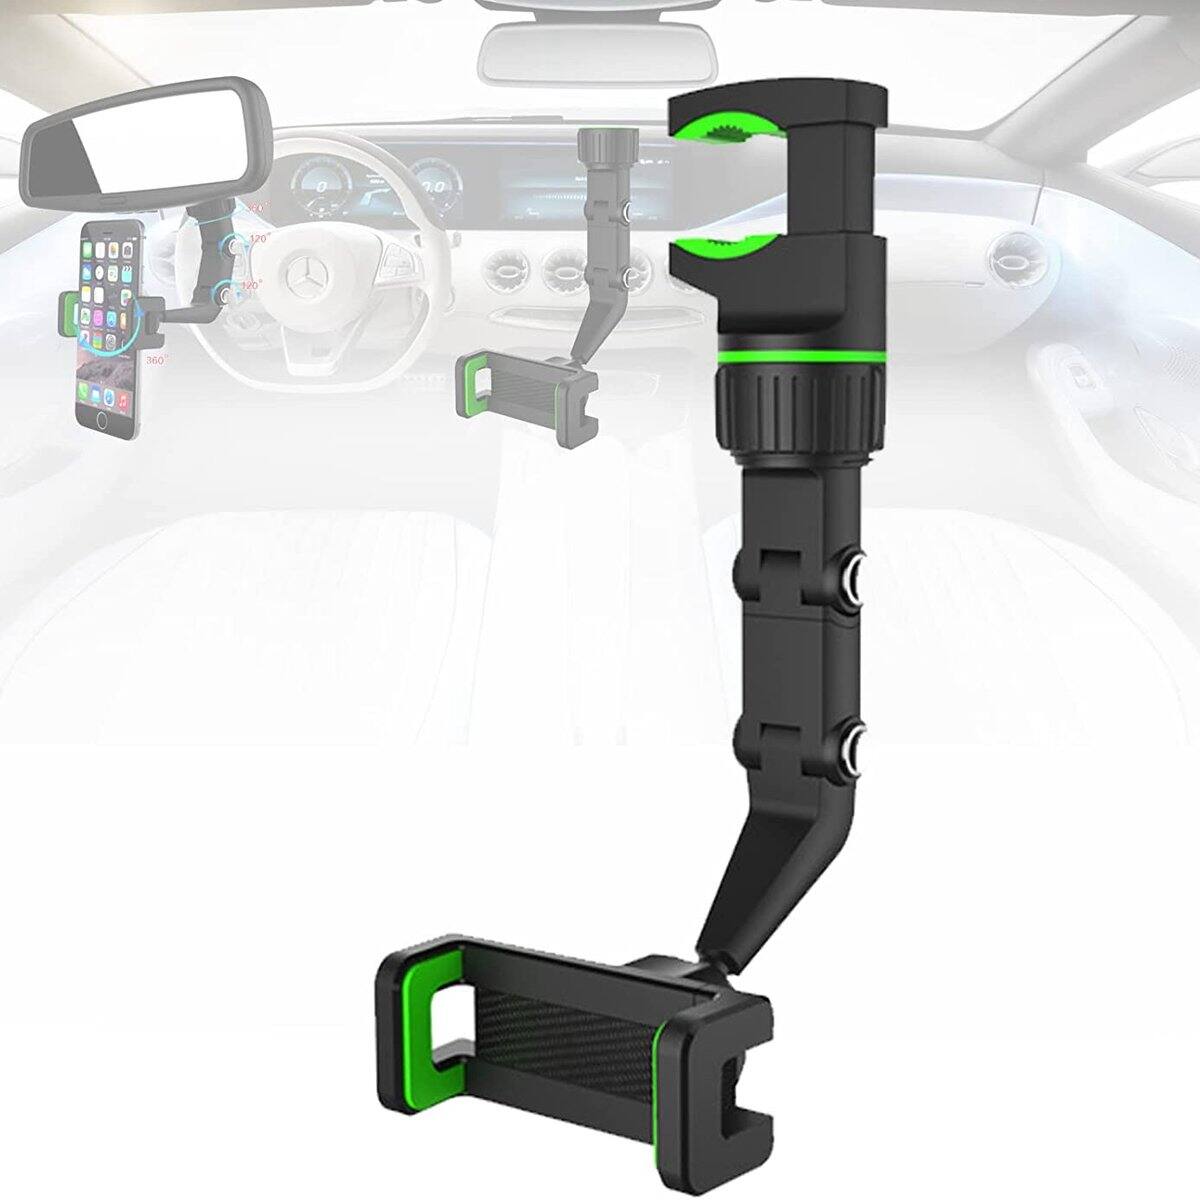 Multifunctional Car Phone Holder Mount, Universal 360° Rotating Car Rearview Mirror Phone Mount $6.99 + Free Shipping